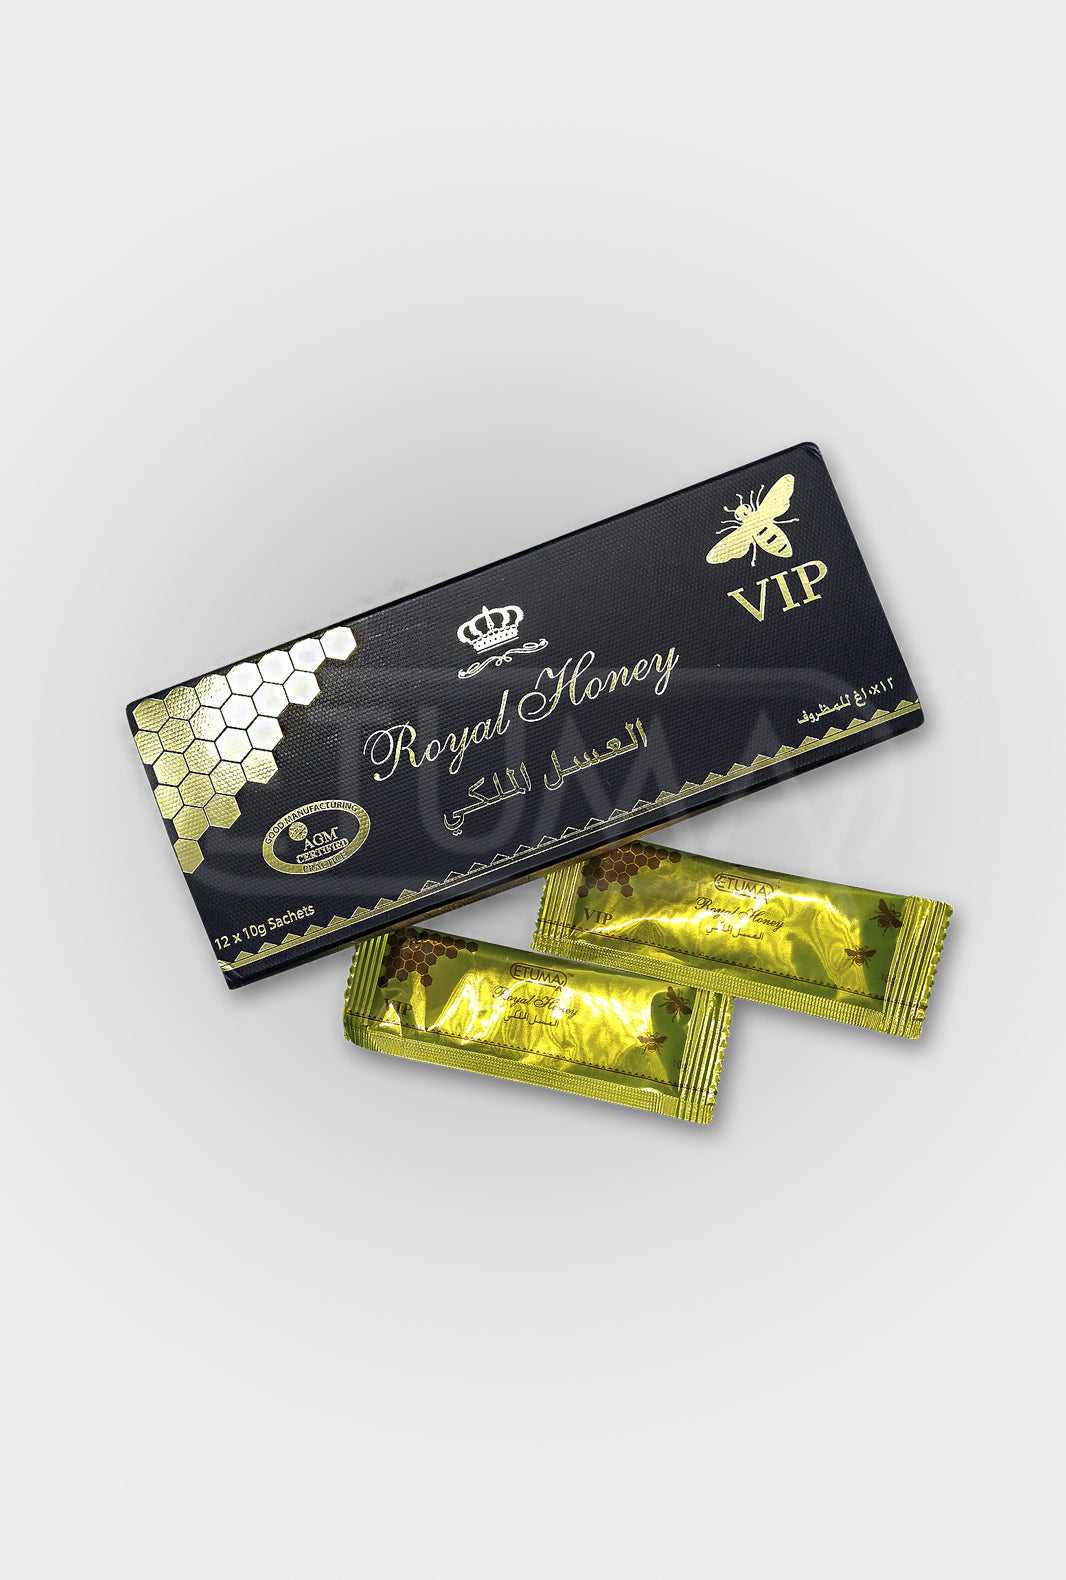 Royal Honey For VIP in Pakistan